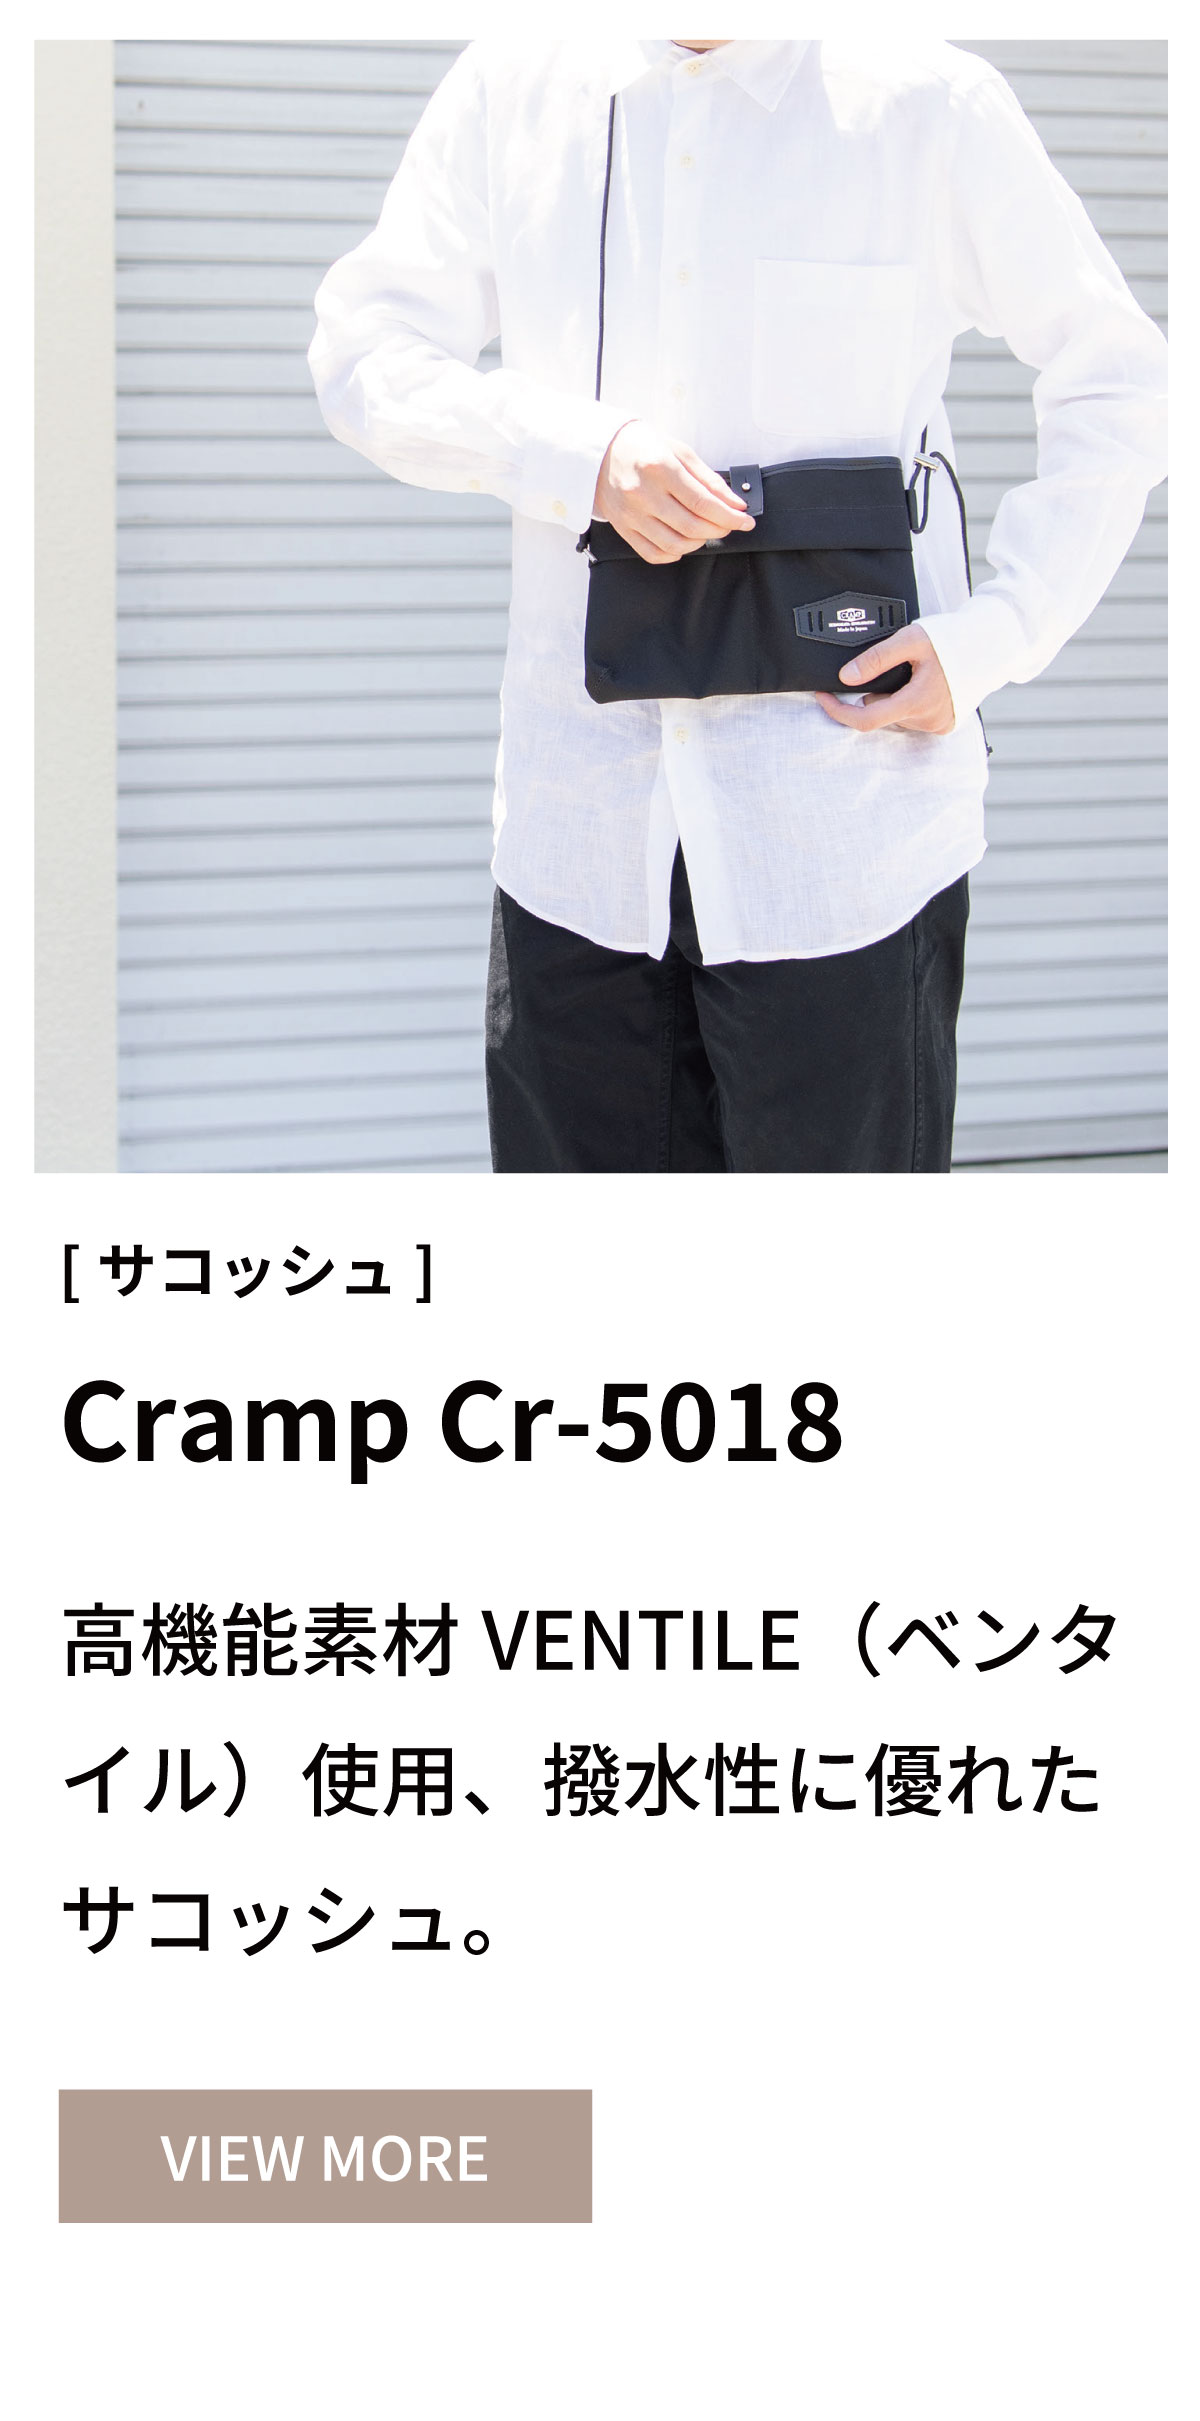 Cramp Cr-5018